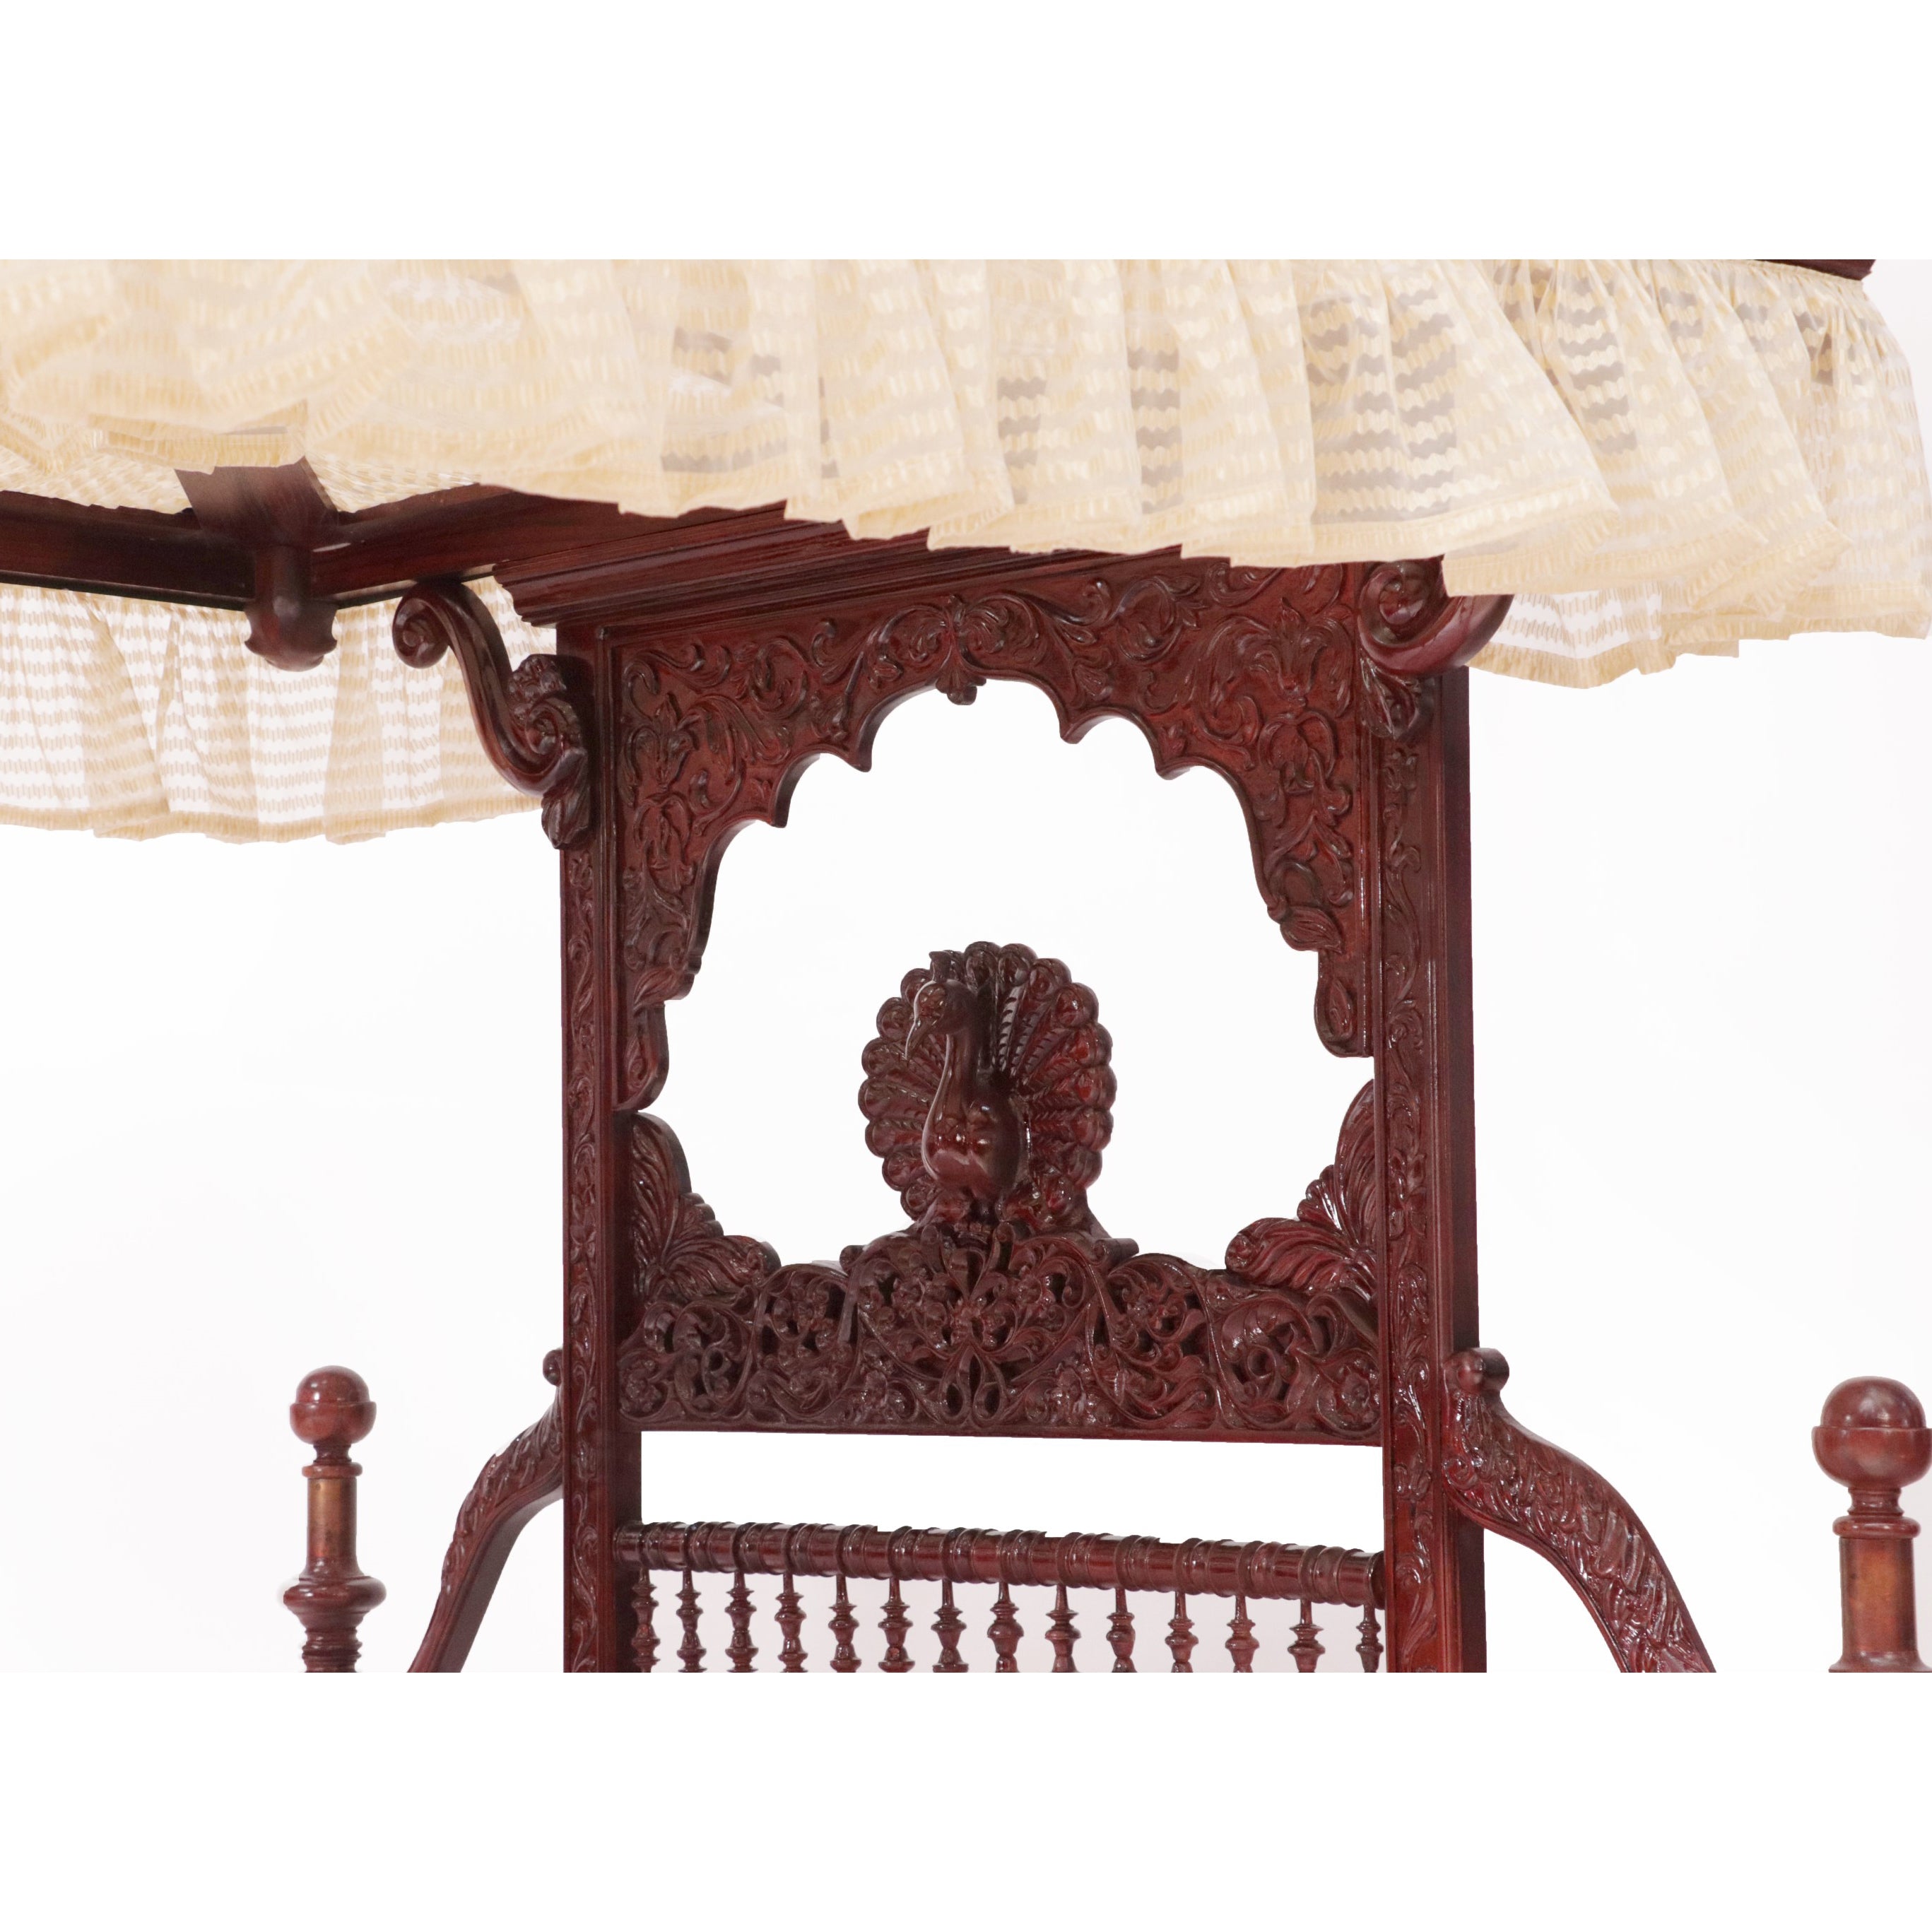 Rajshahi Maharaja Intricate Carved Bed Bed